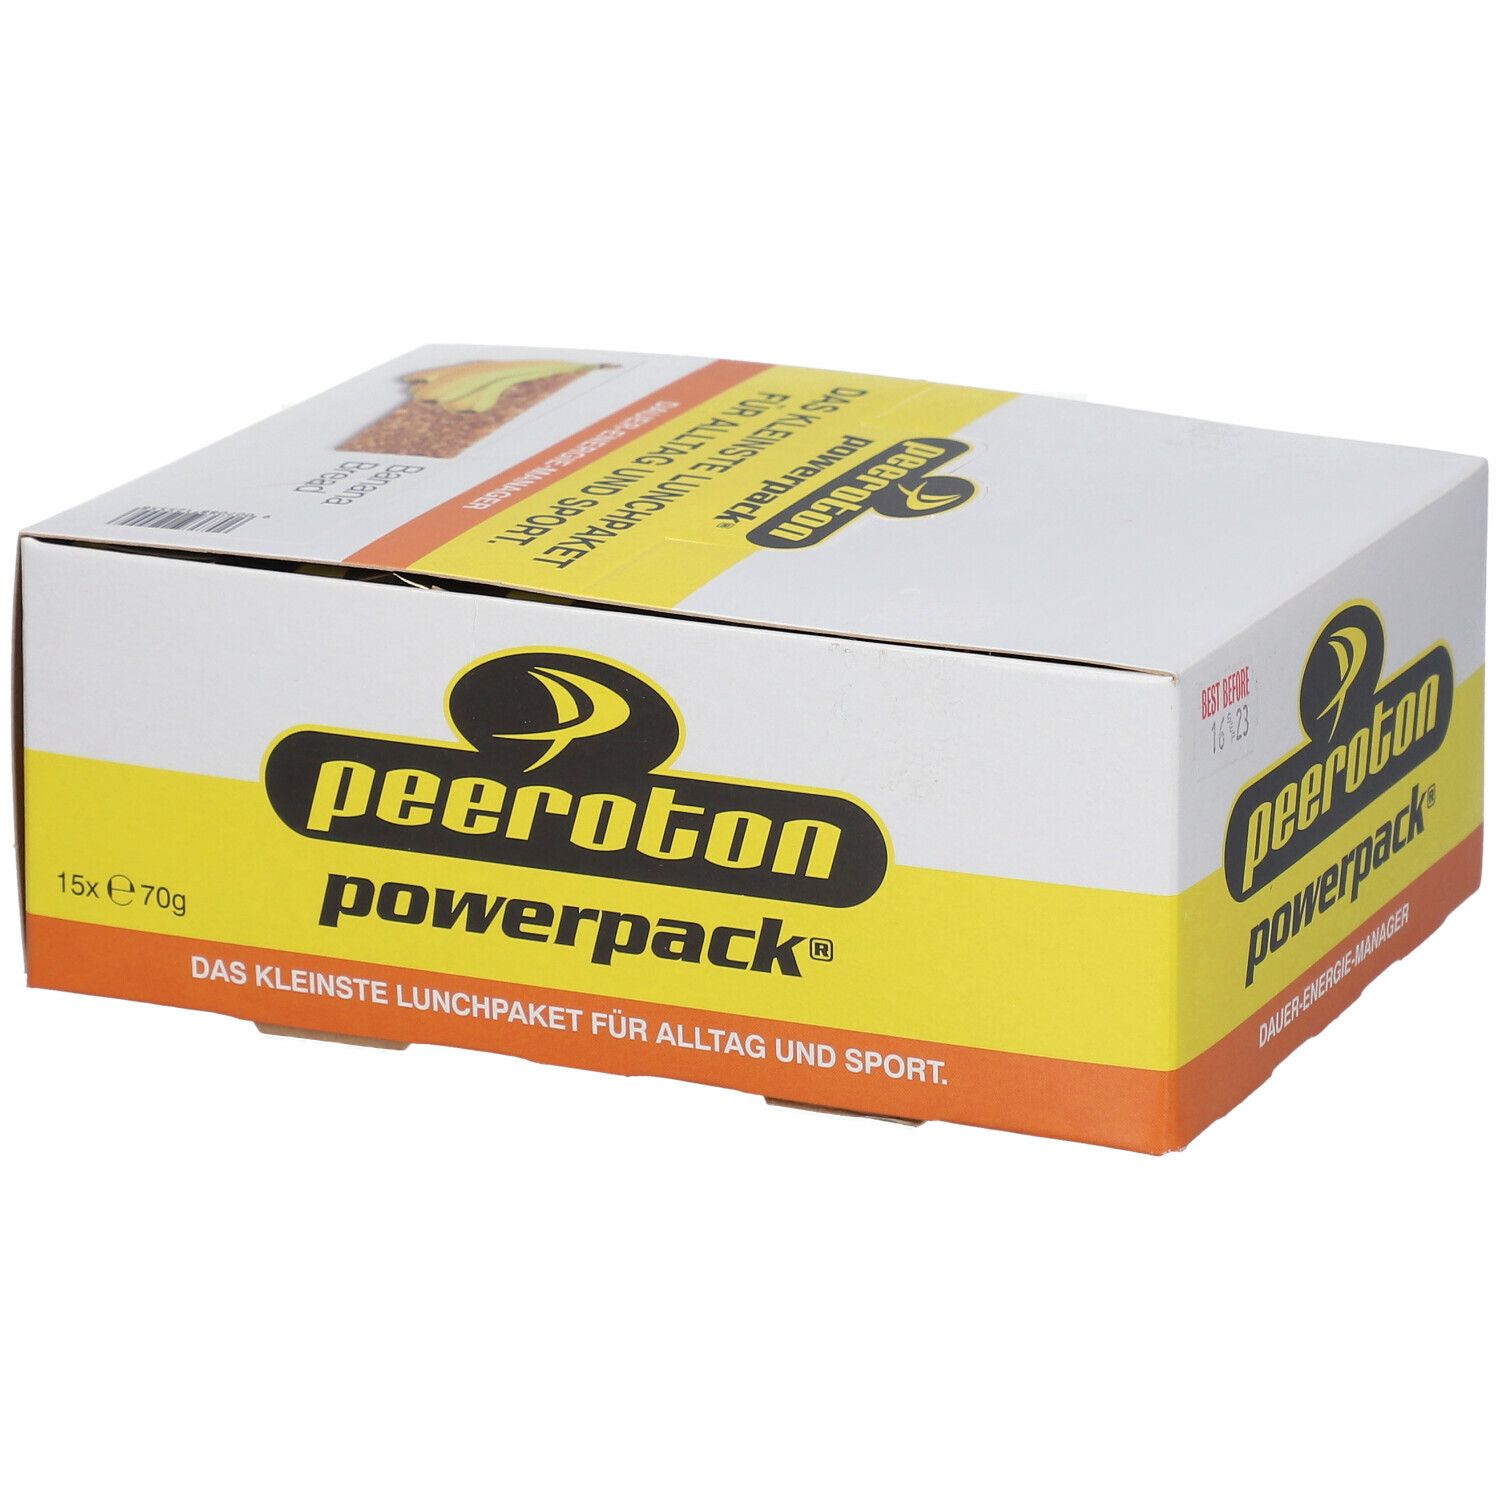 peeroton® Powerpack Riegel Banana Bread